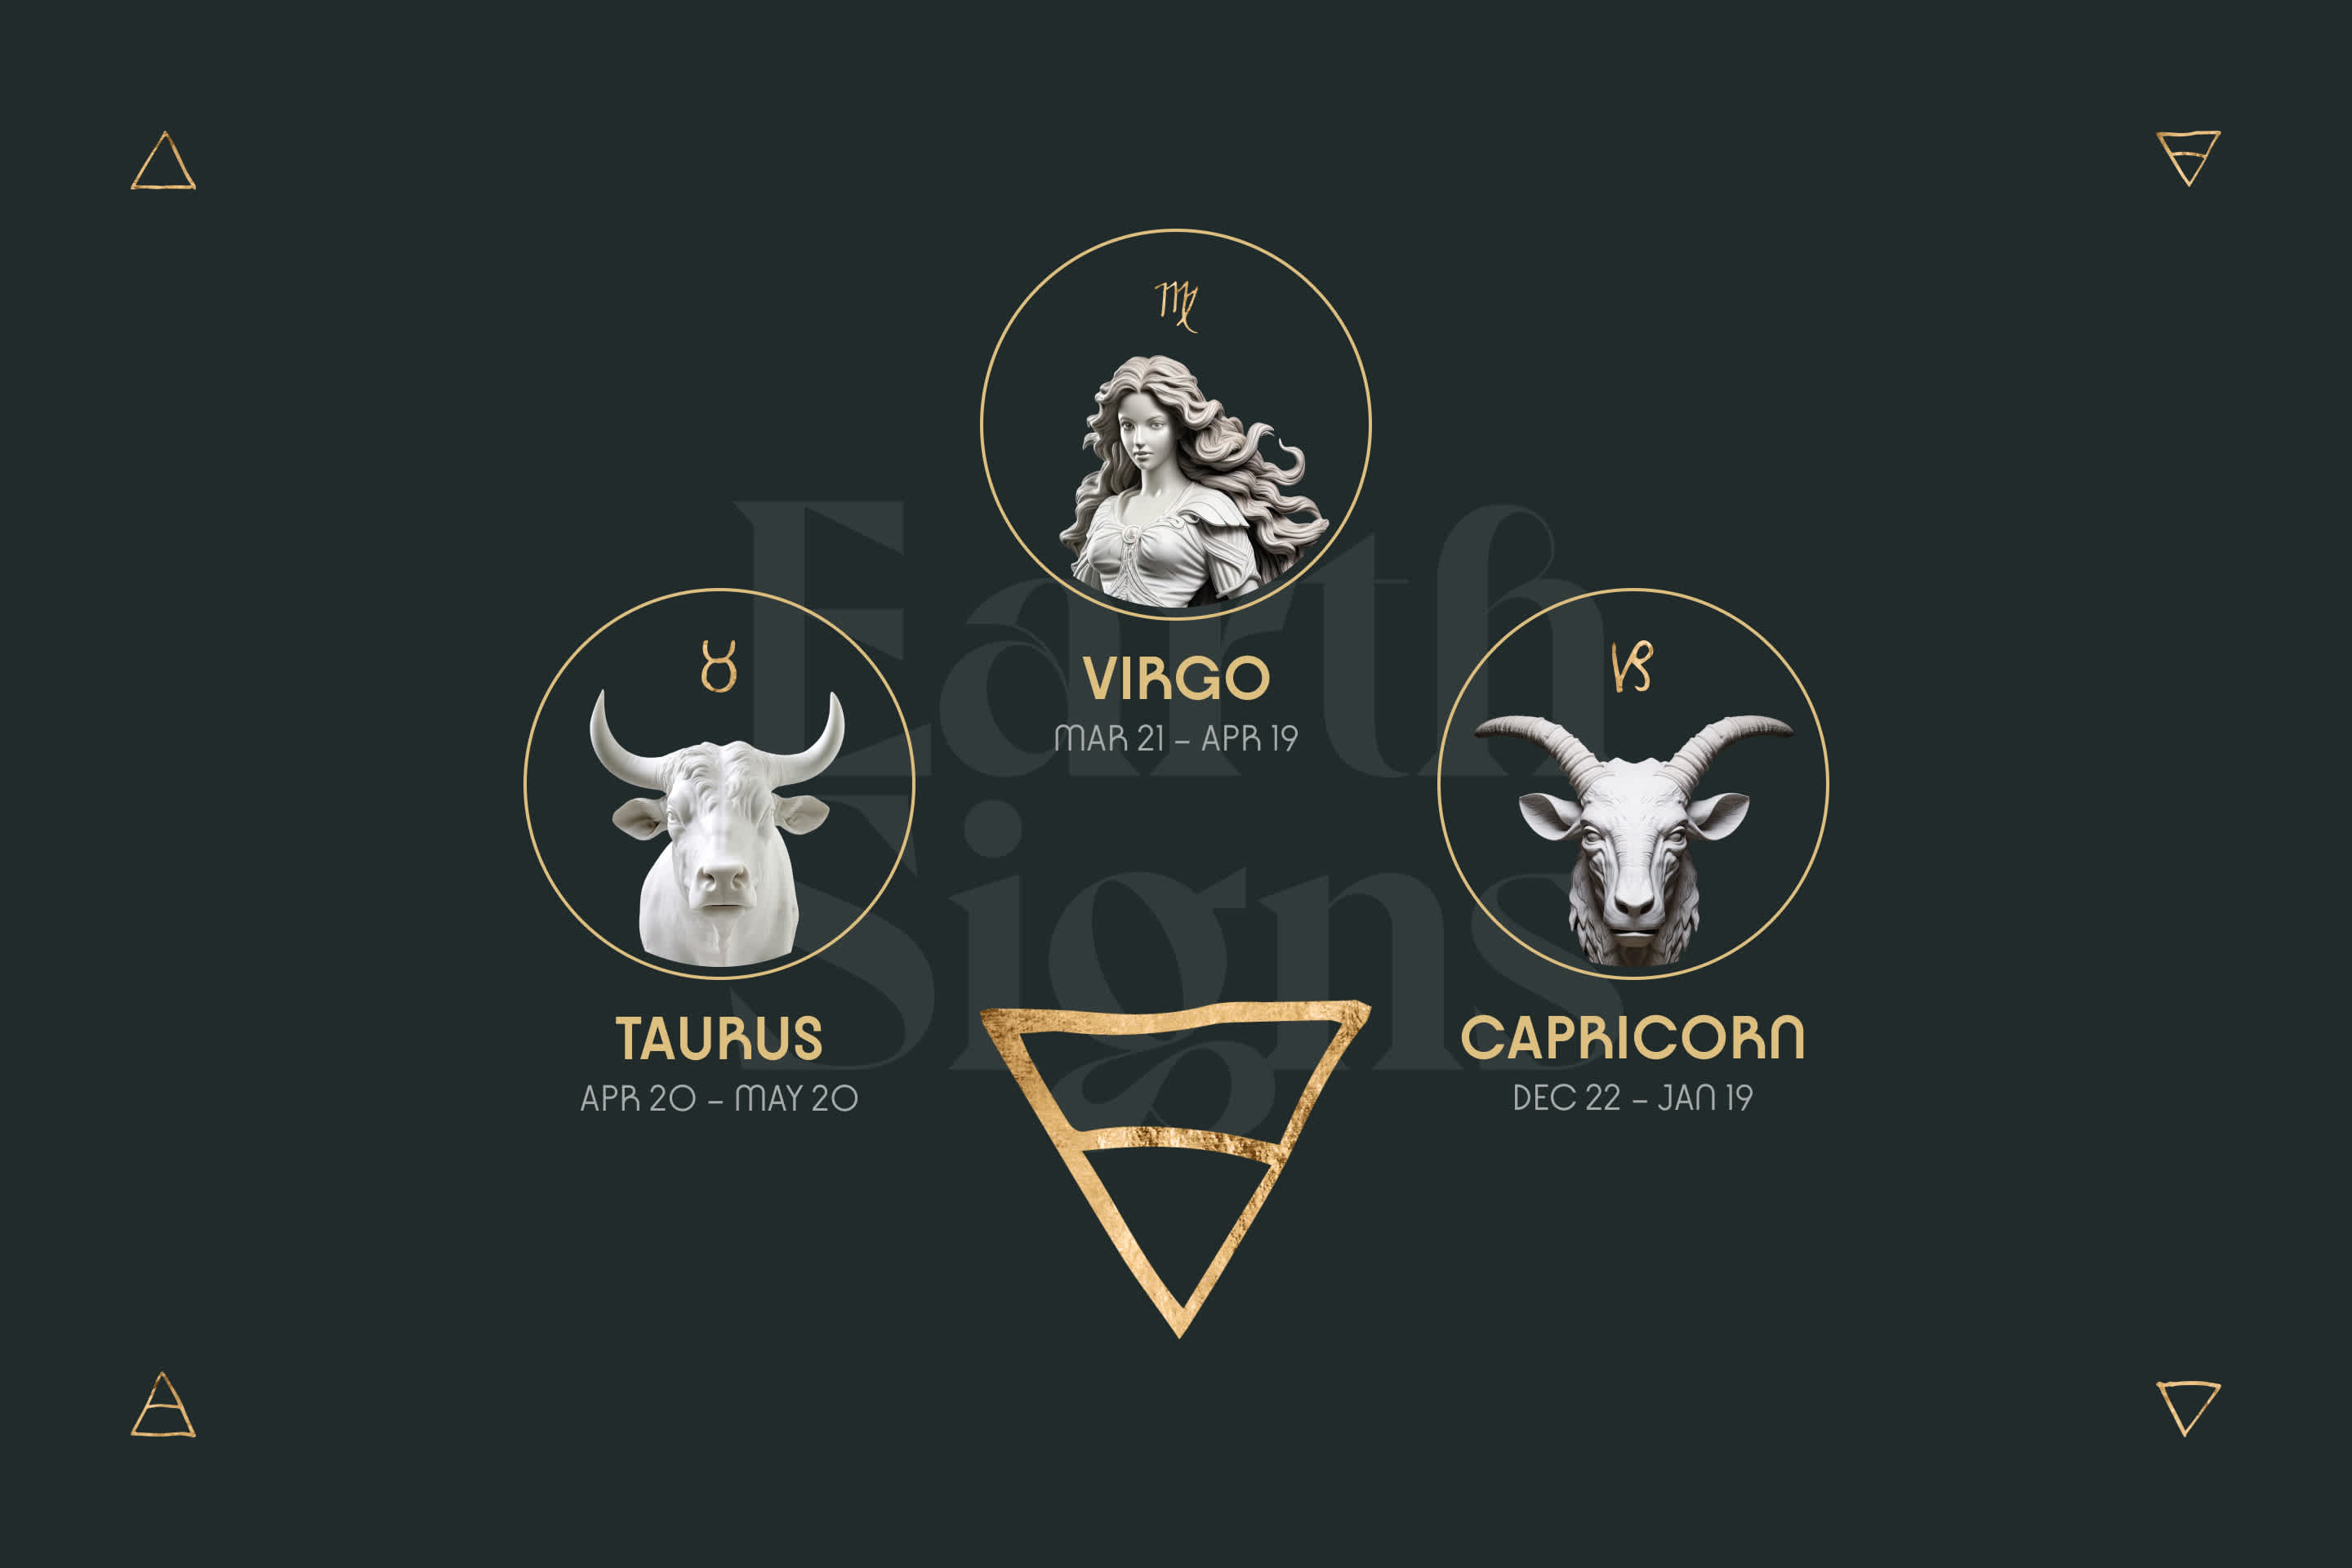 Earth Signs: Taurus, Virgo and Capricorn